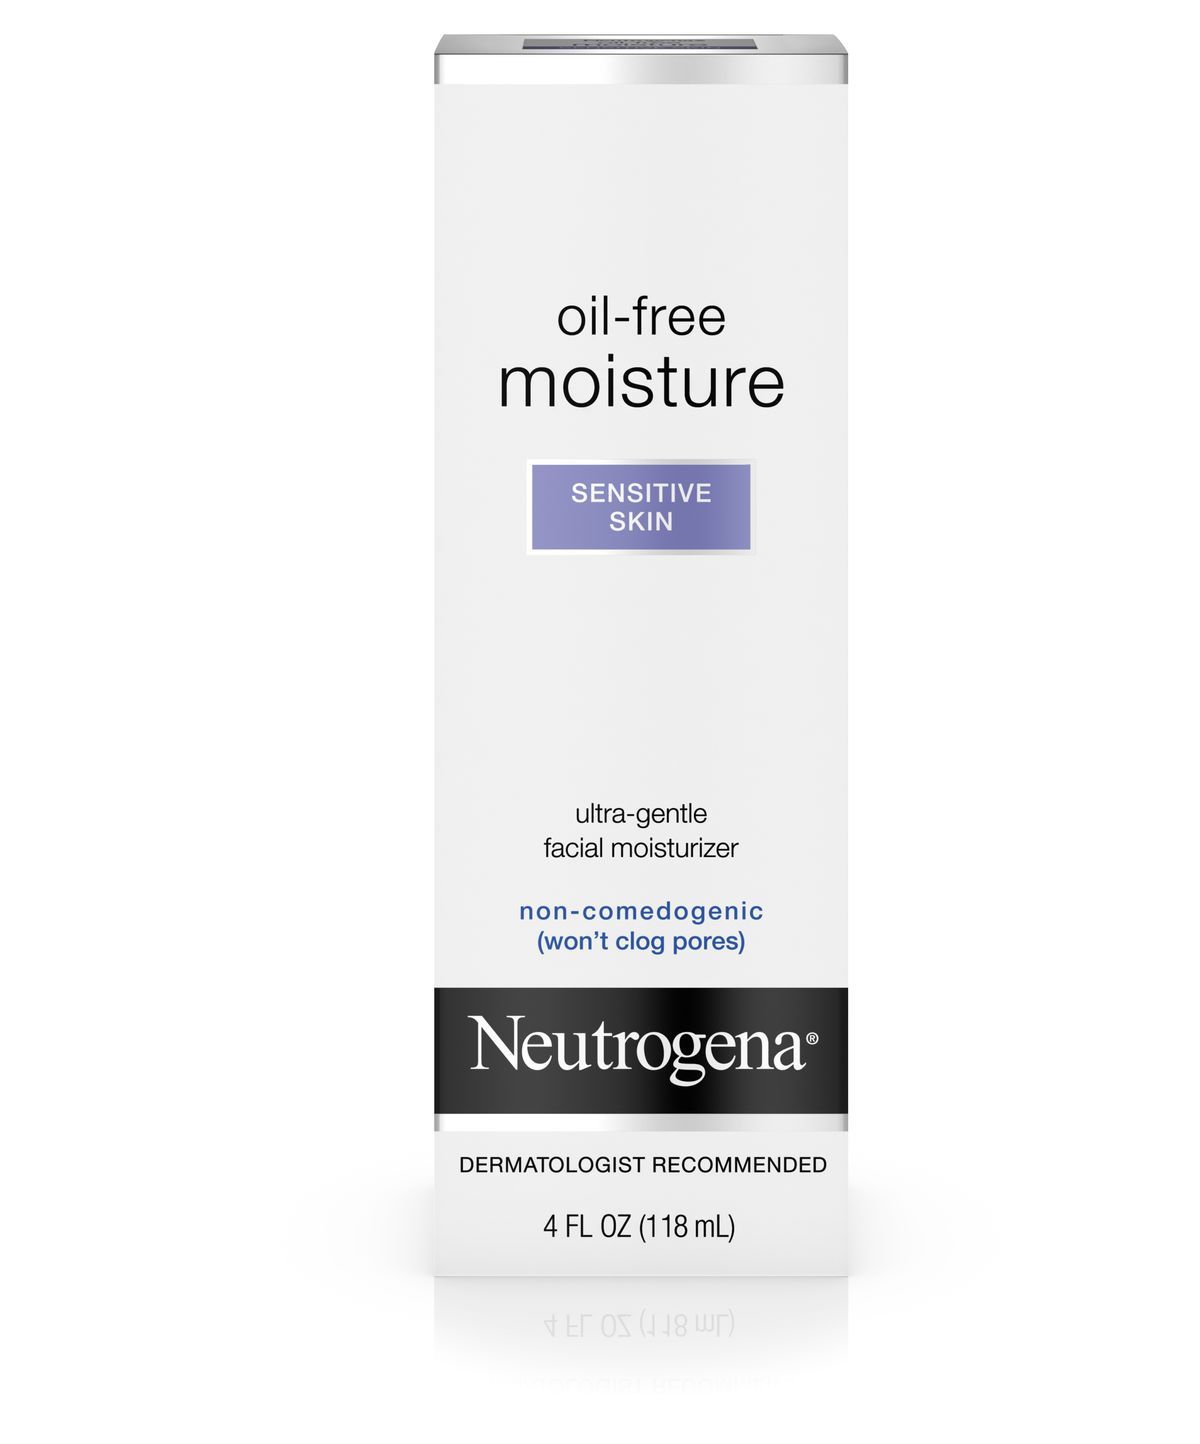 Neutrogena Oil-Free Moisture-Sensitive Skin